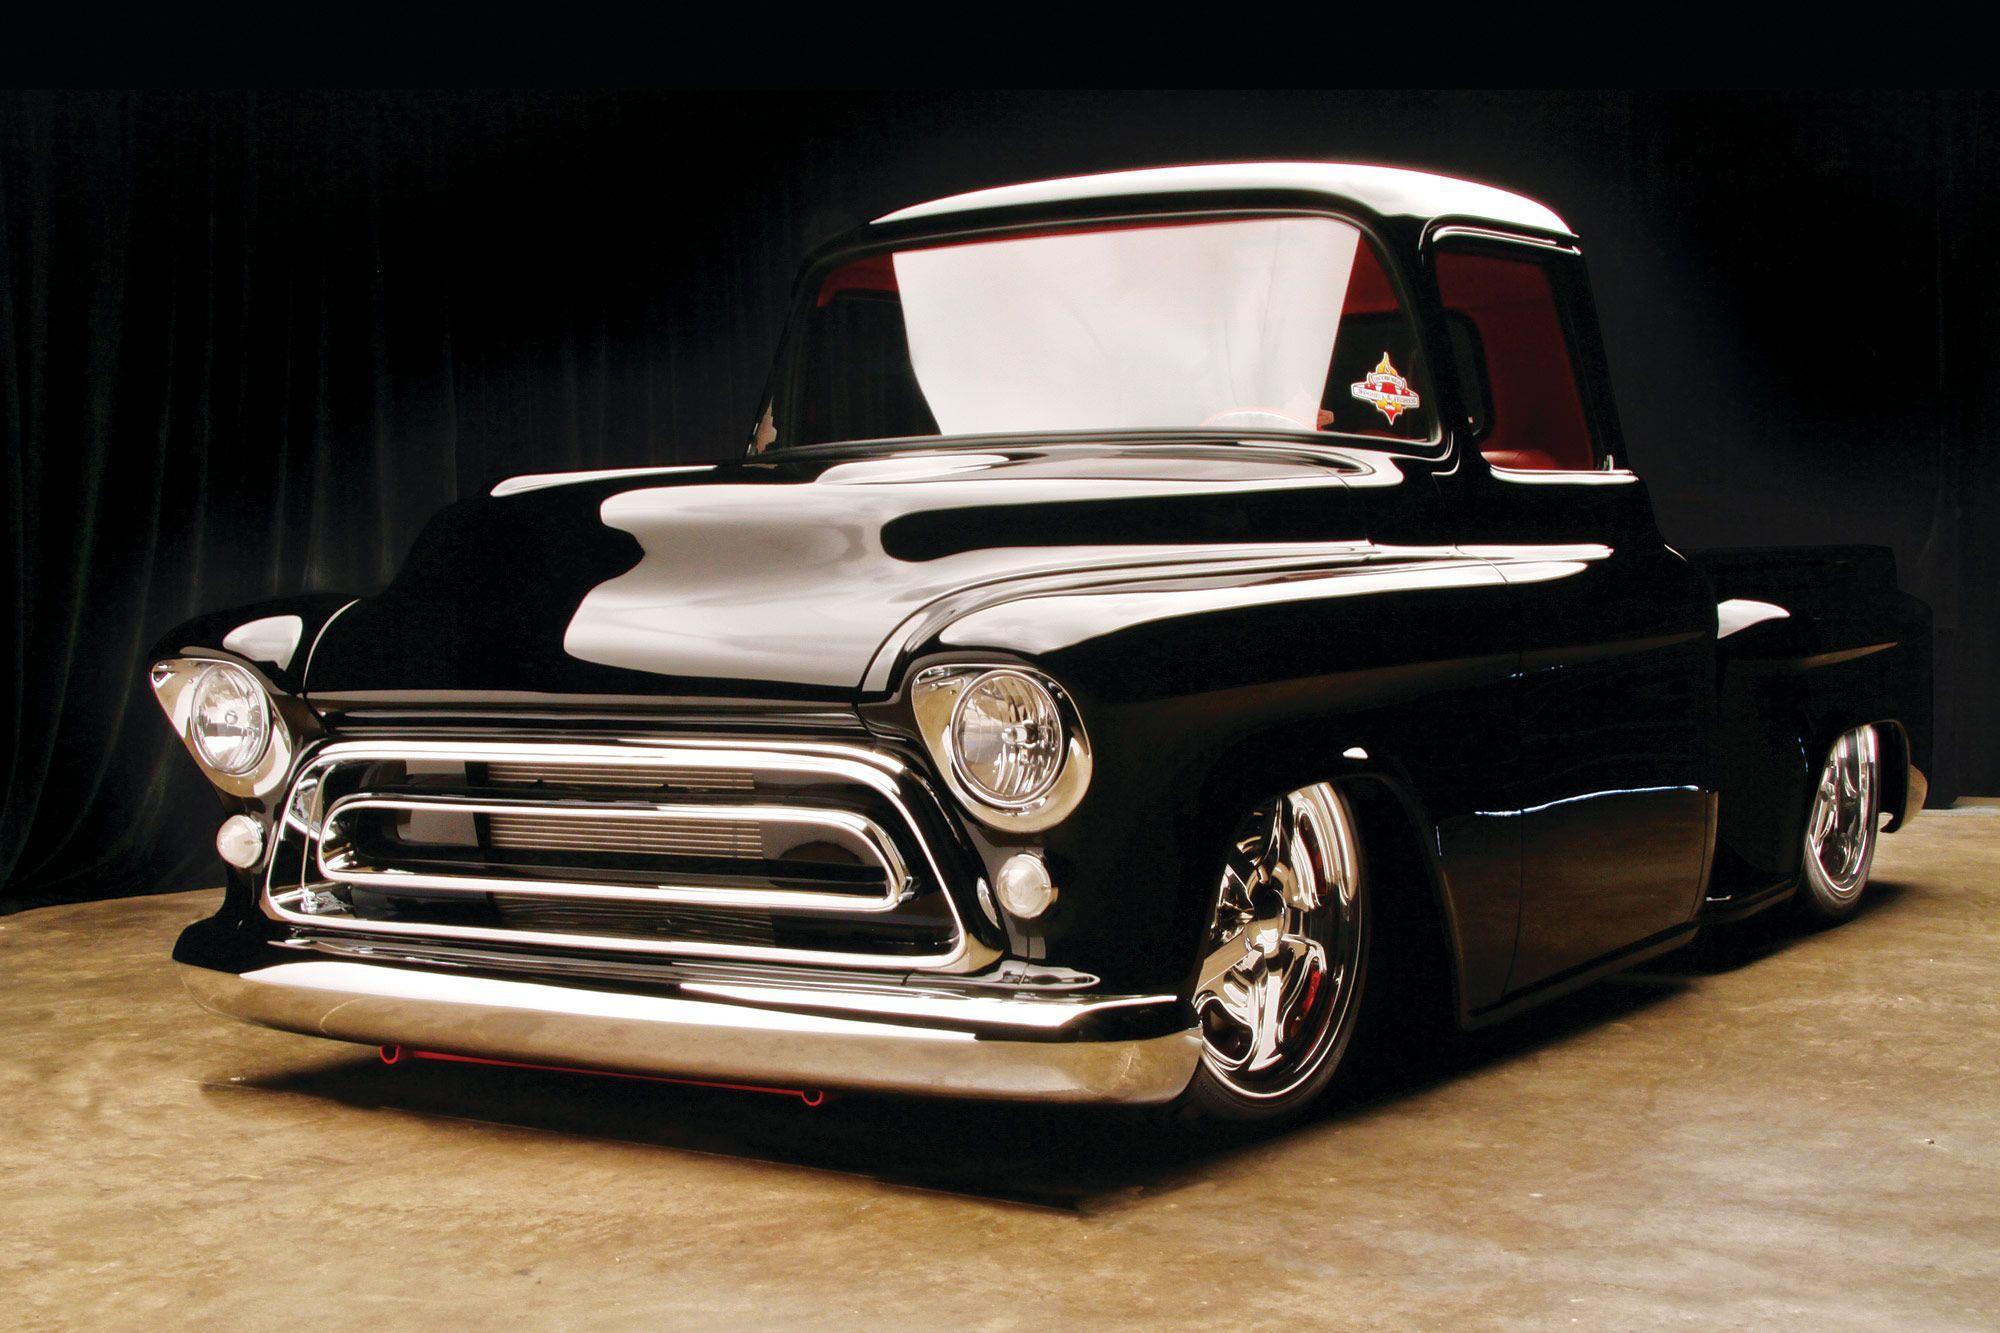 Hd Wallpaper 1954 Chevrolet Pickup Trucks Render Axesent Creations American Cars Wallpaper Flare